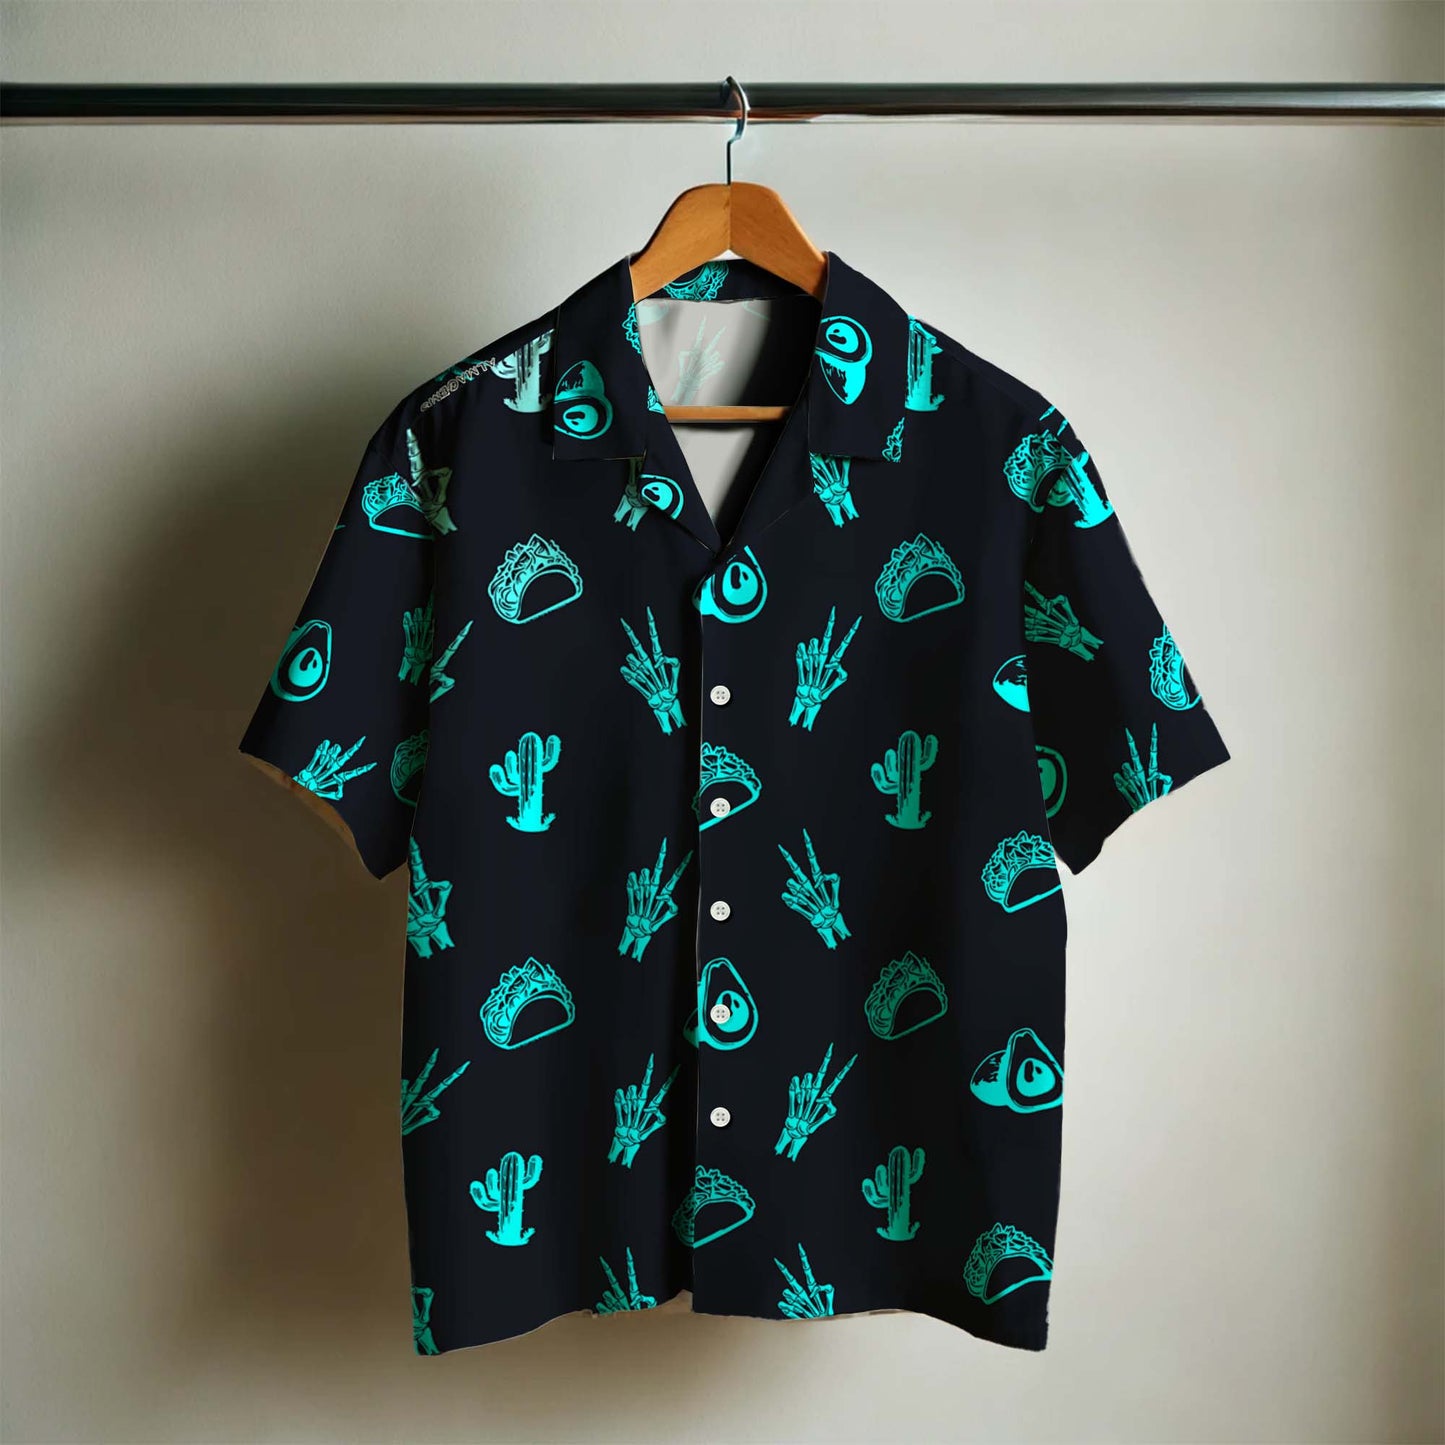 Neon Mexico Vibes - Camisa hawaiana unisex personalizada - ME004_HW